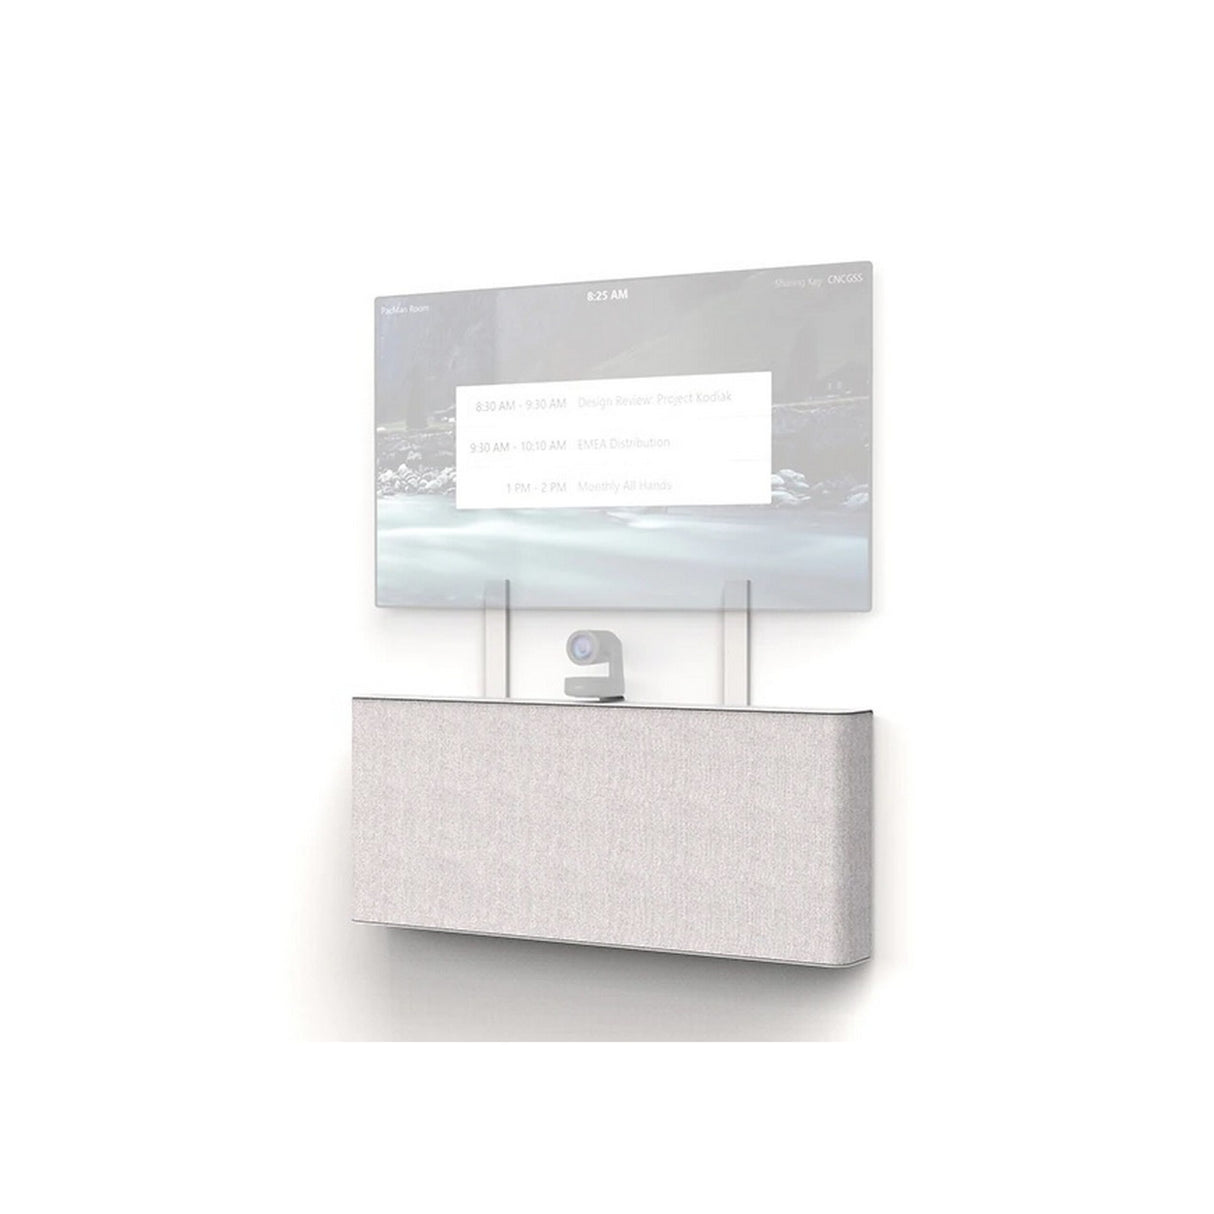 Heckler Design H543-SW AV Credenza 6U Elegant Furniture for Video Meetings, White